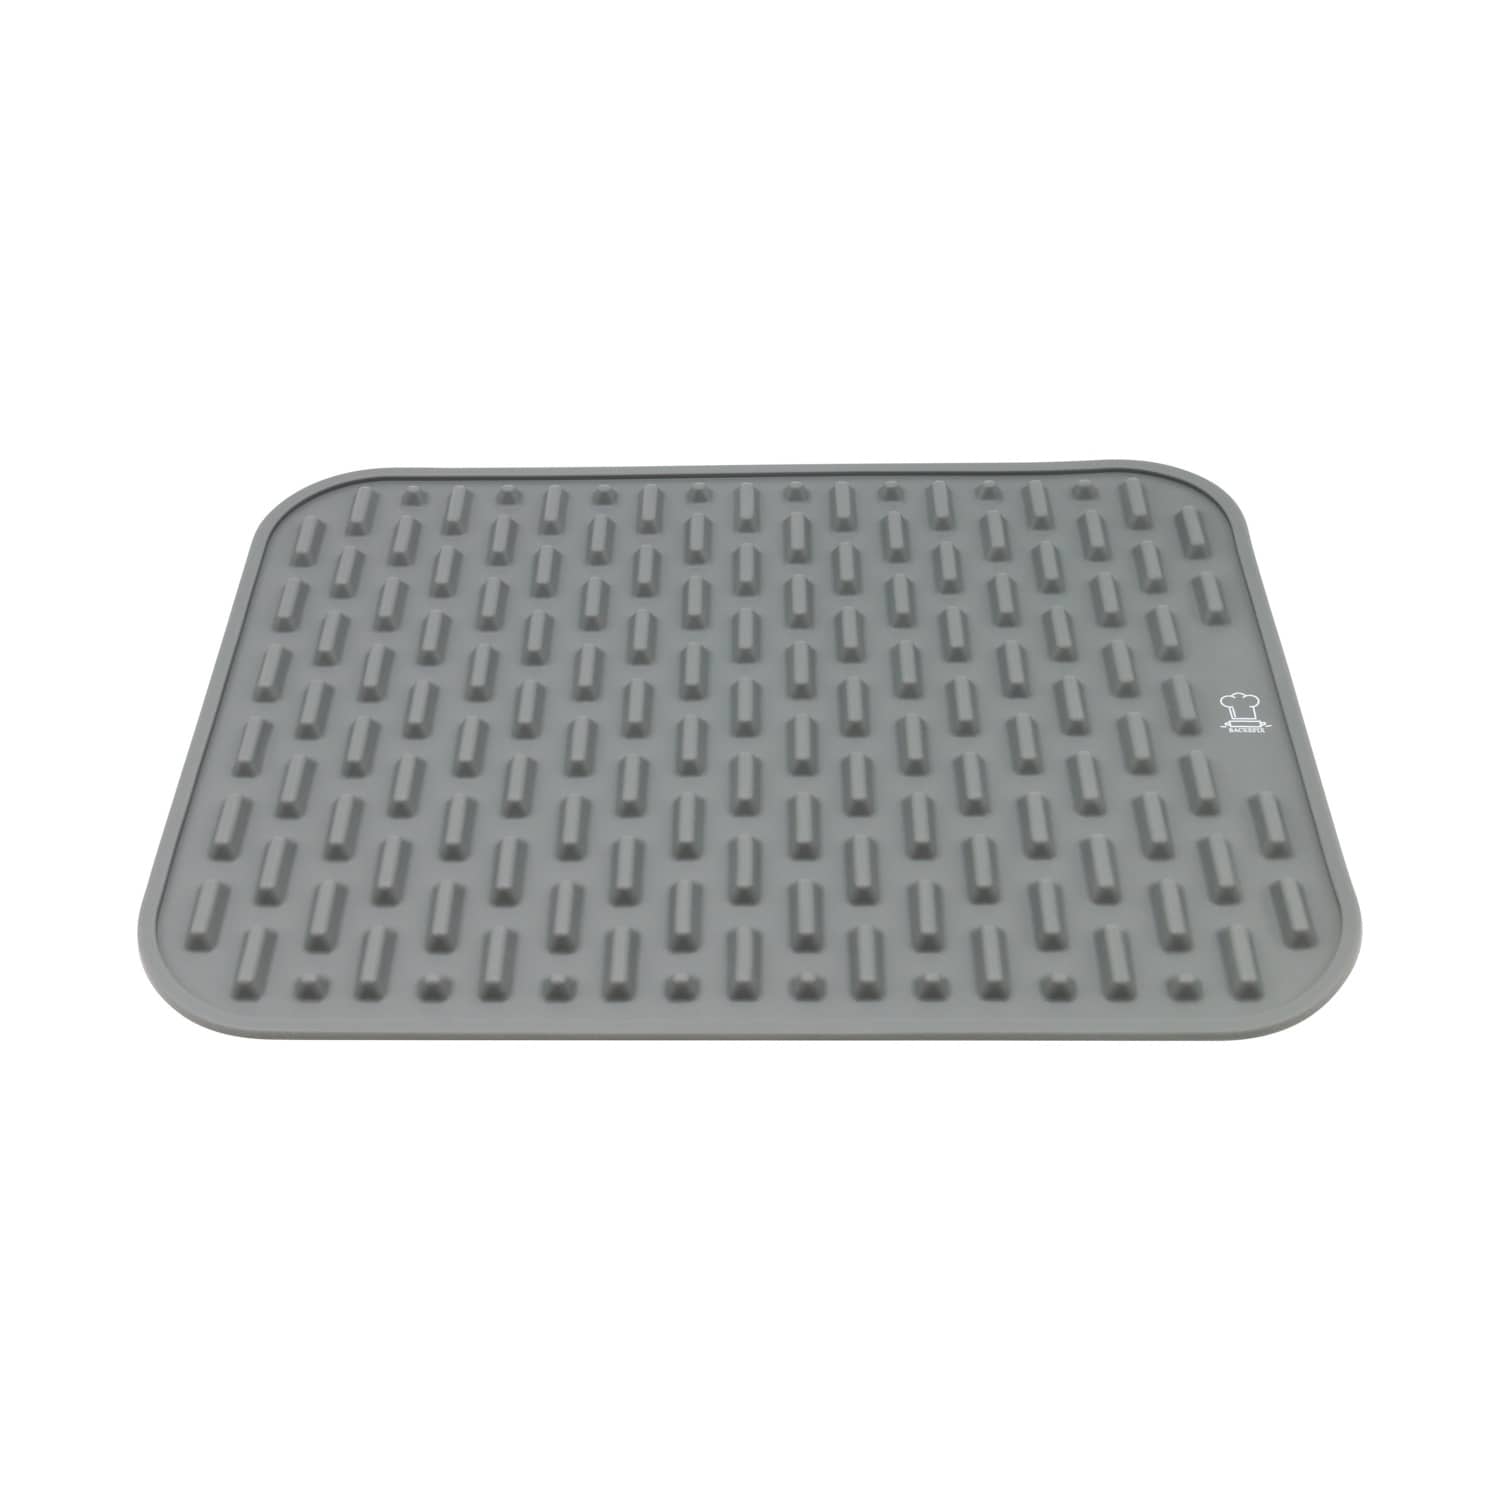 Backefix – Grease separating mat (40x30cm)